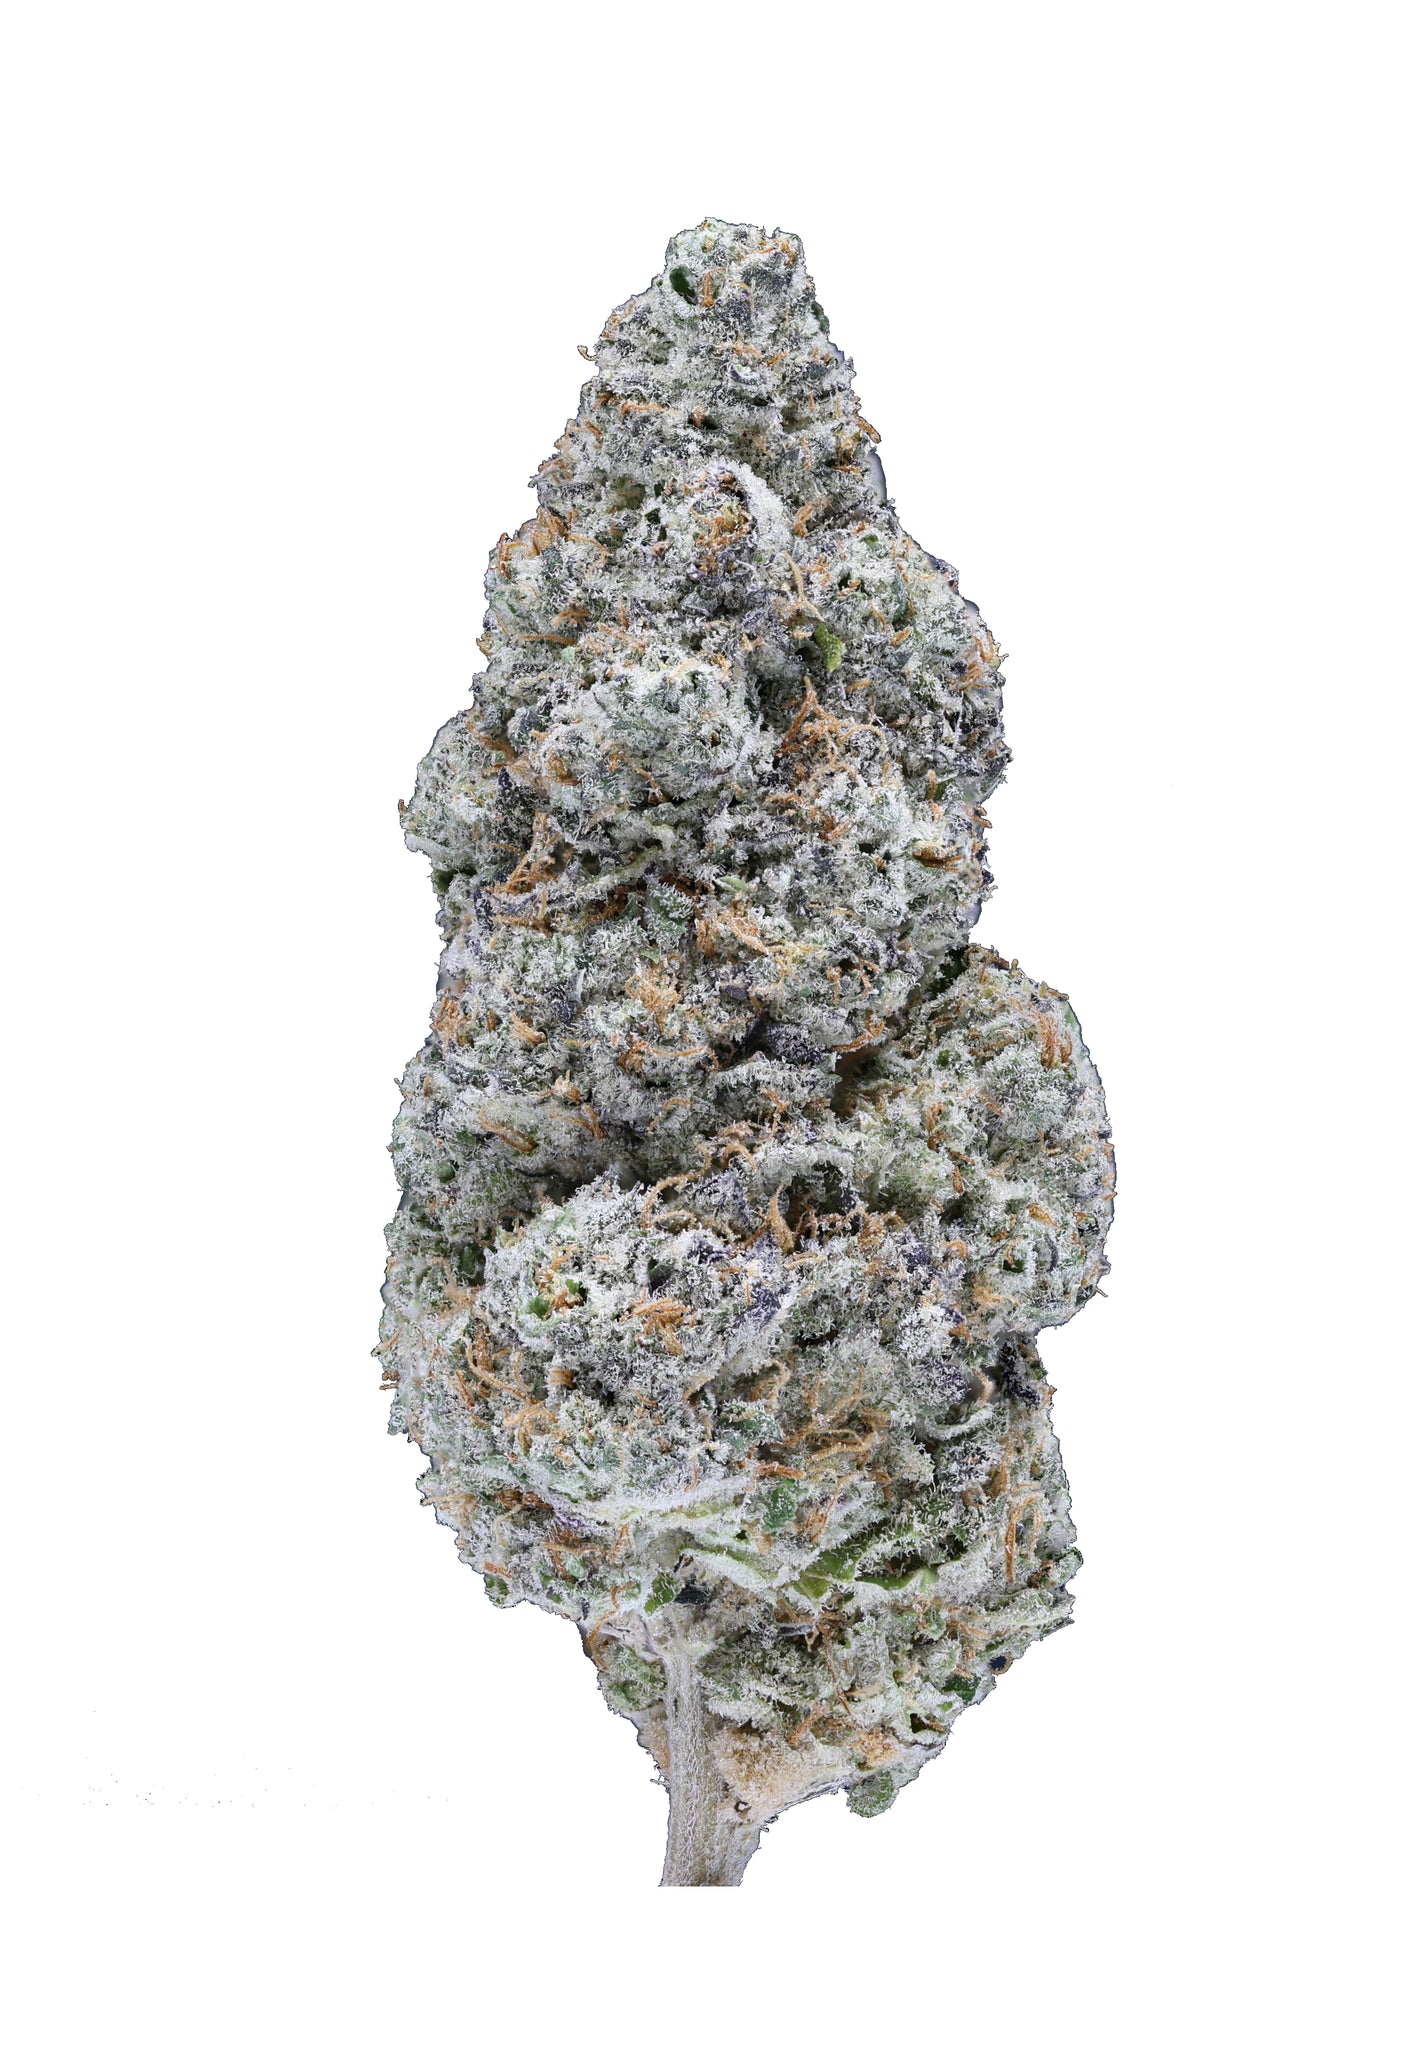 Mule Fuel Indoor High THCA Cannabis Flower